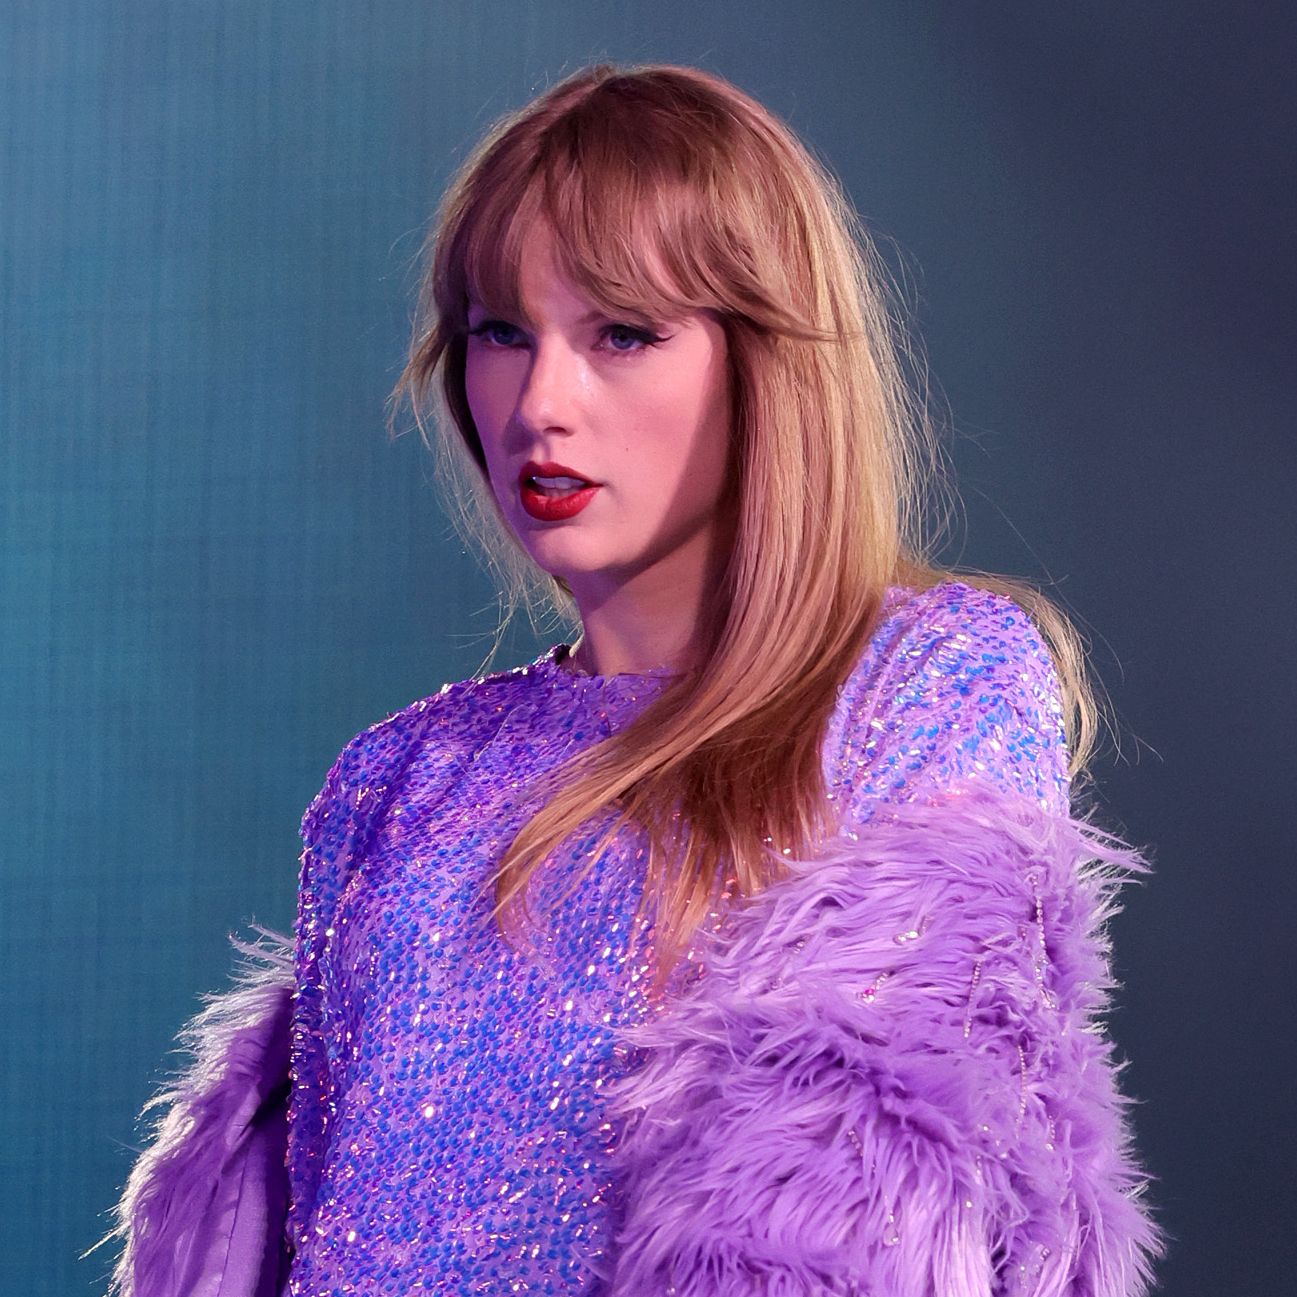 Taylor Swift Criticizes Harmful Anti-LGBTQ+ Legislation